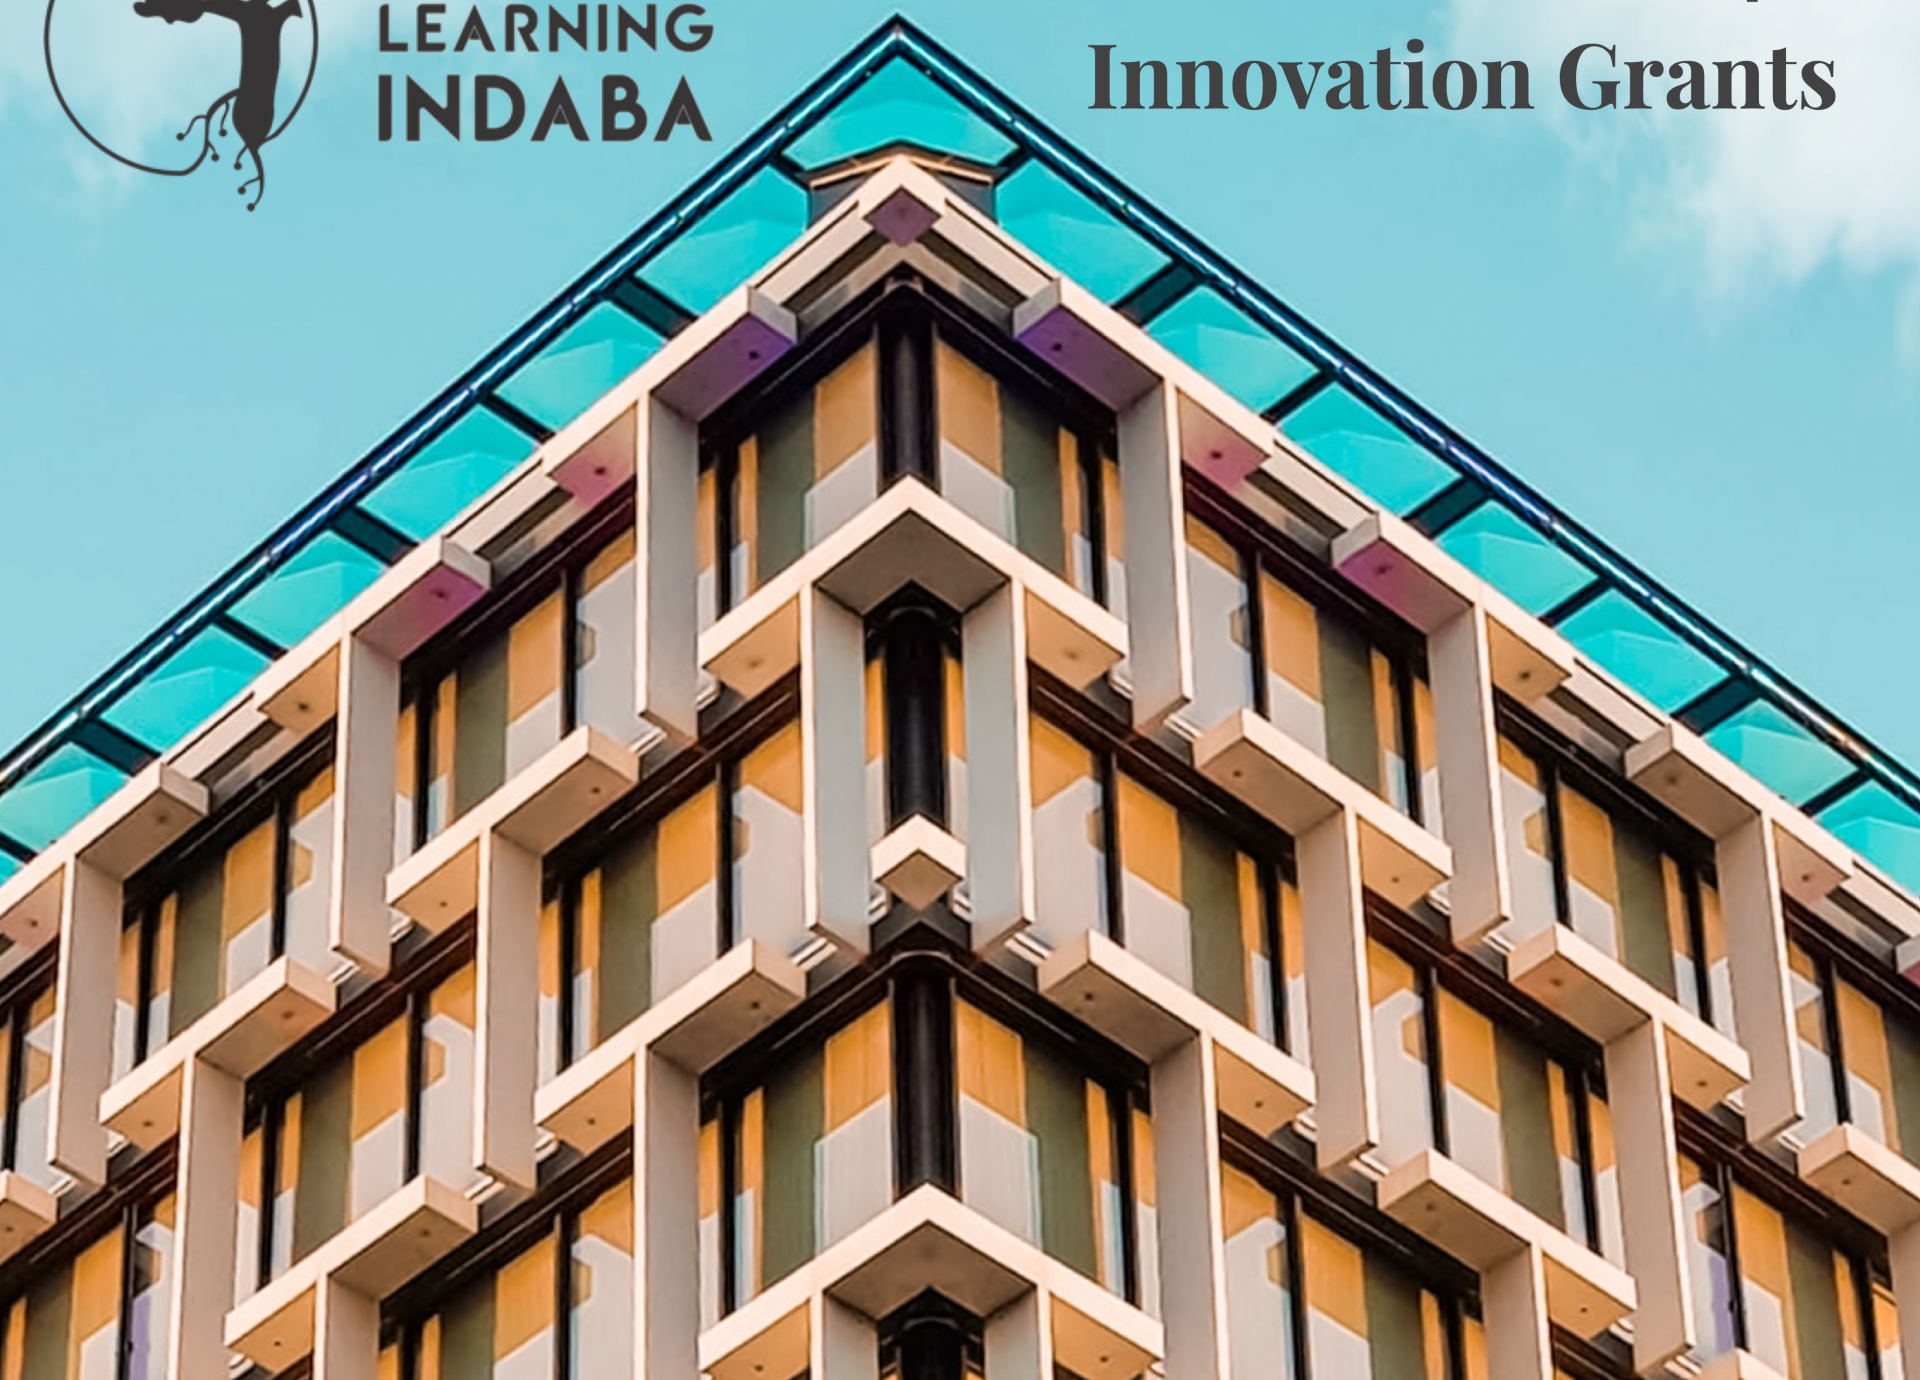 IndabaX-AI4D Innovation Grants